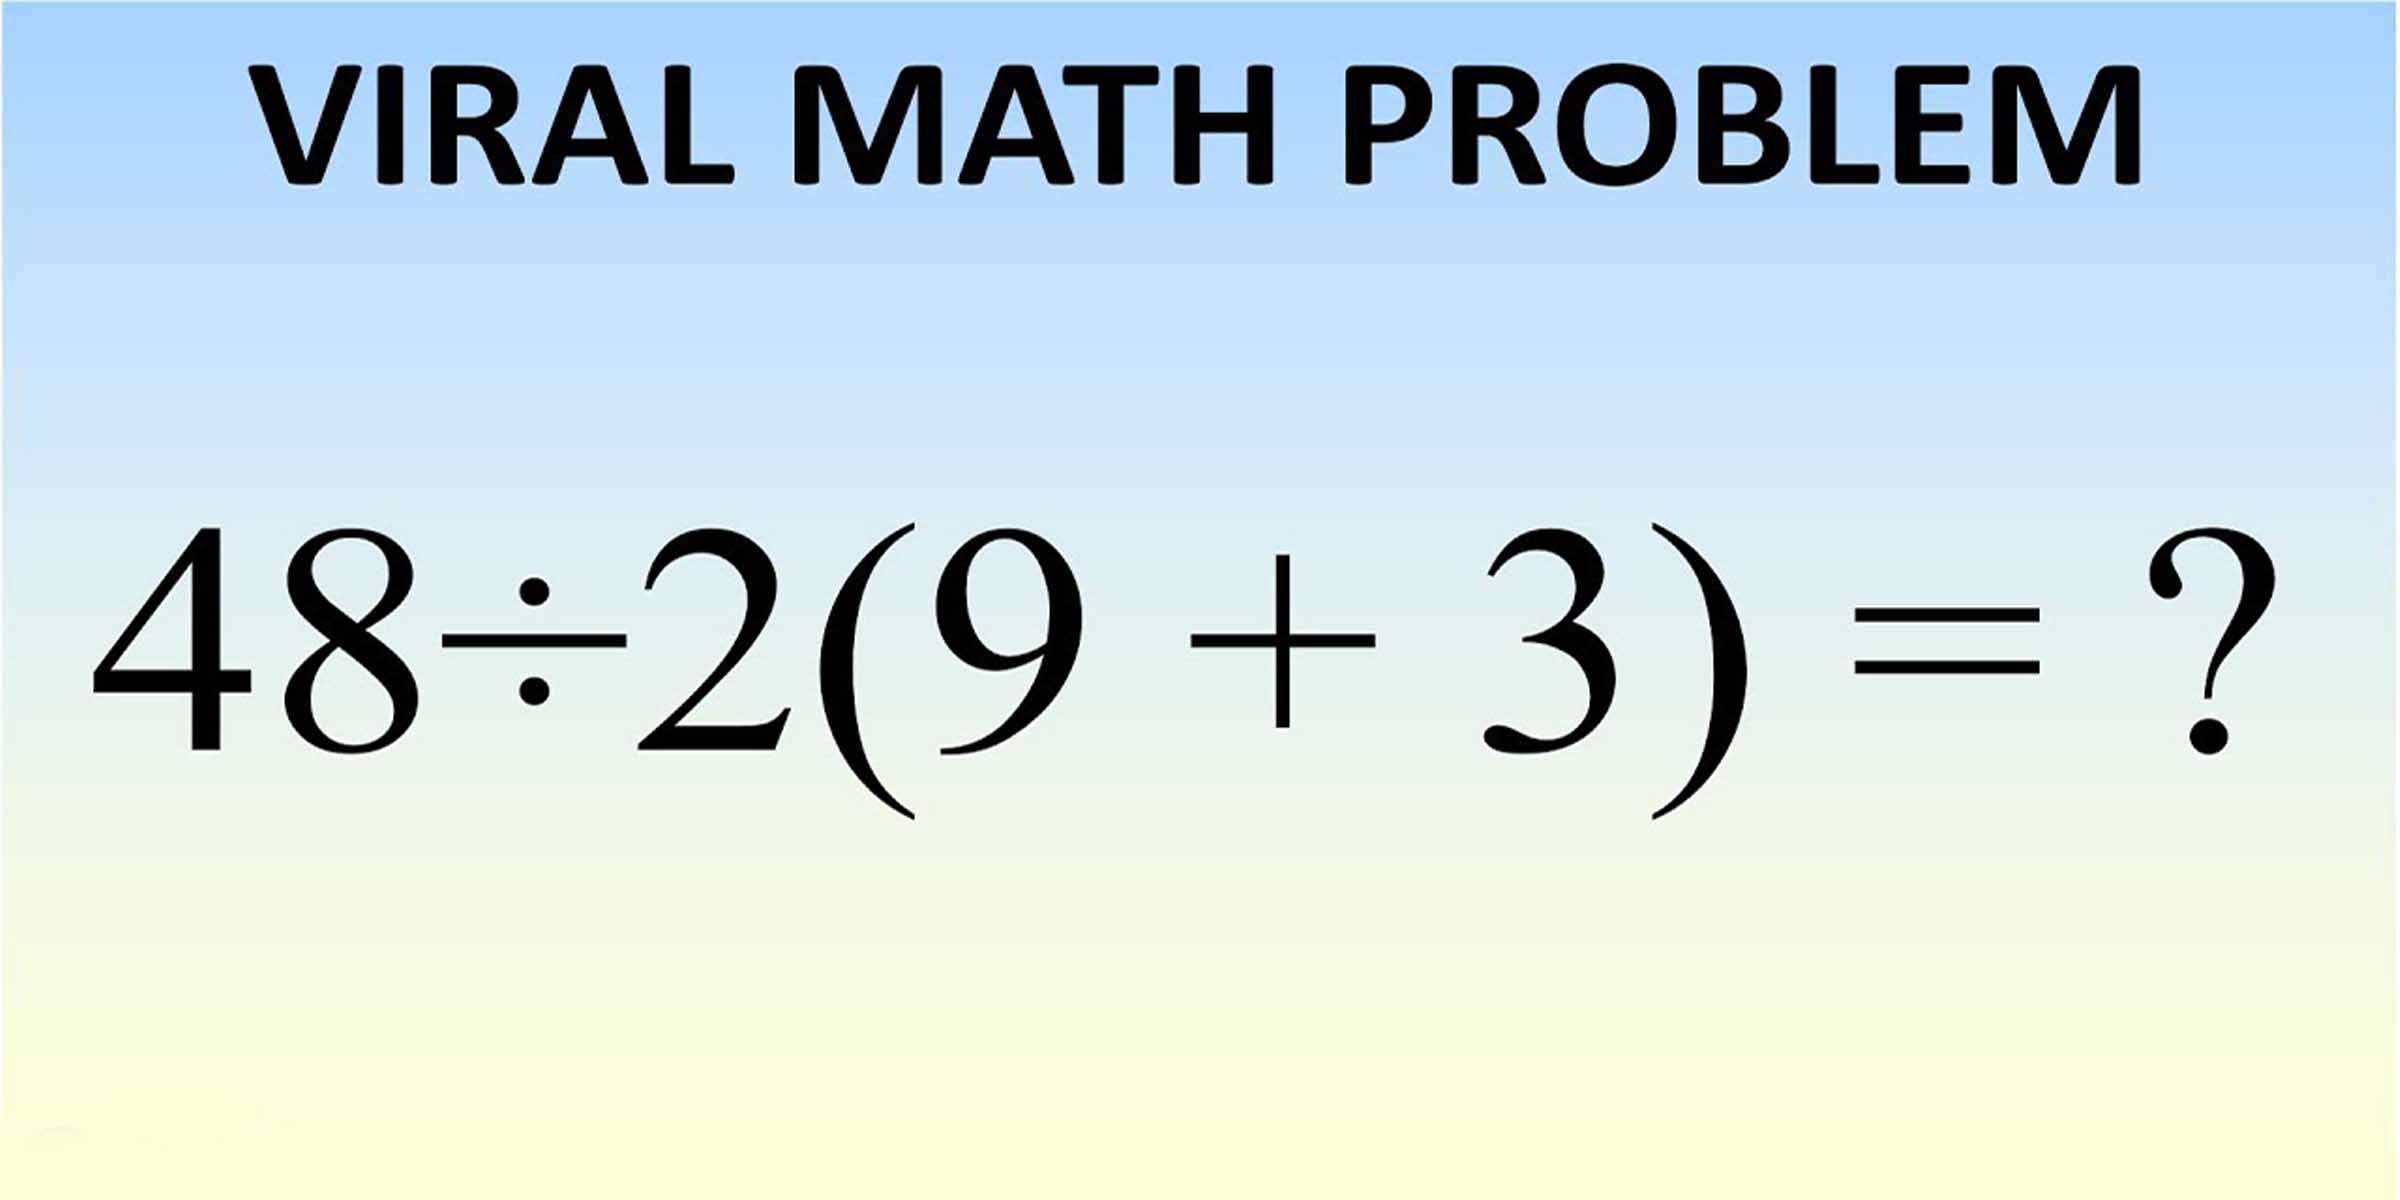 Mathematics problems